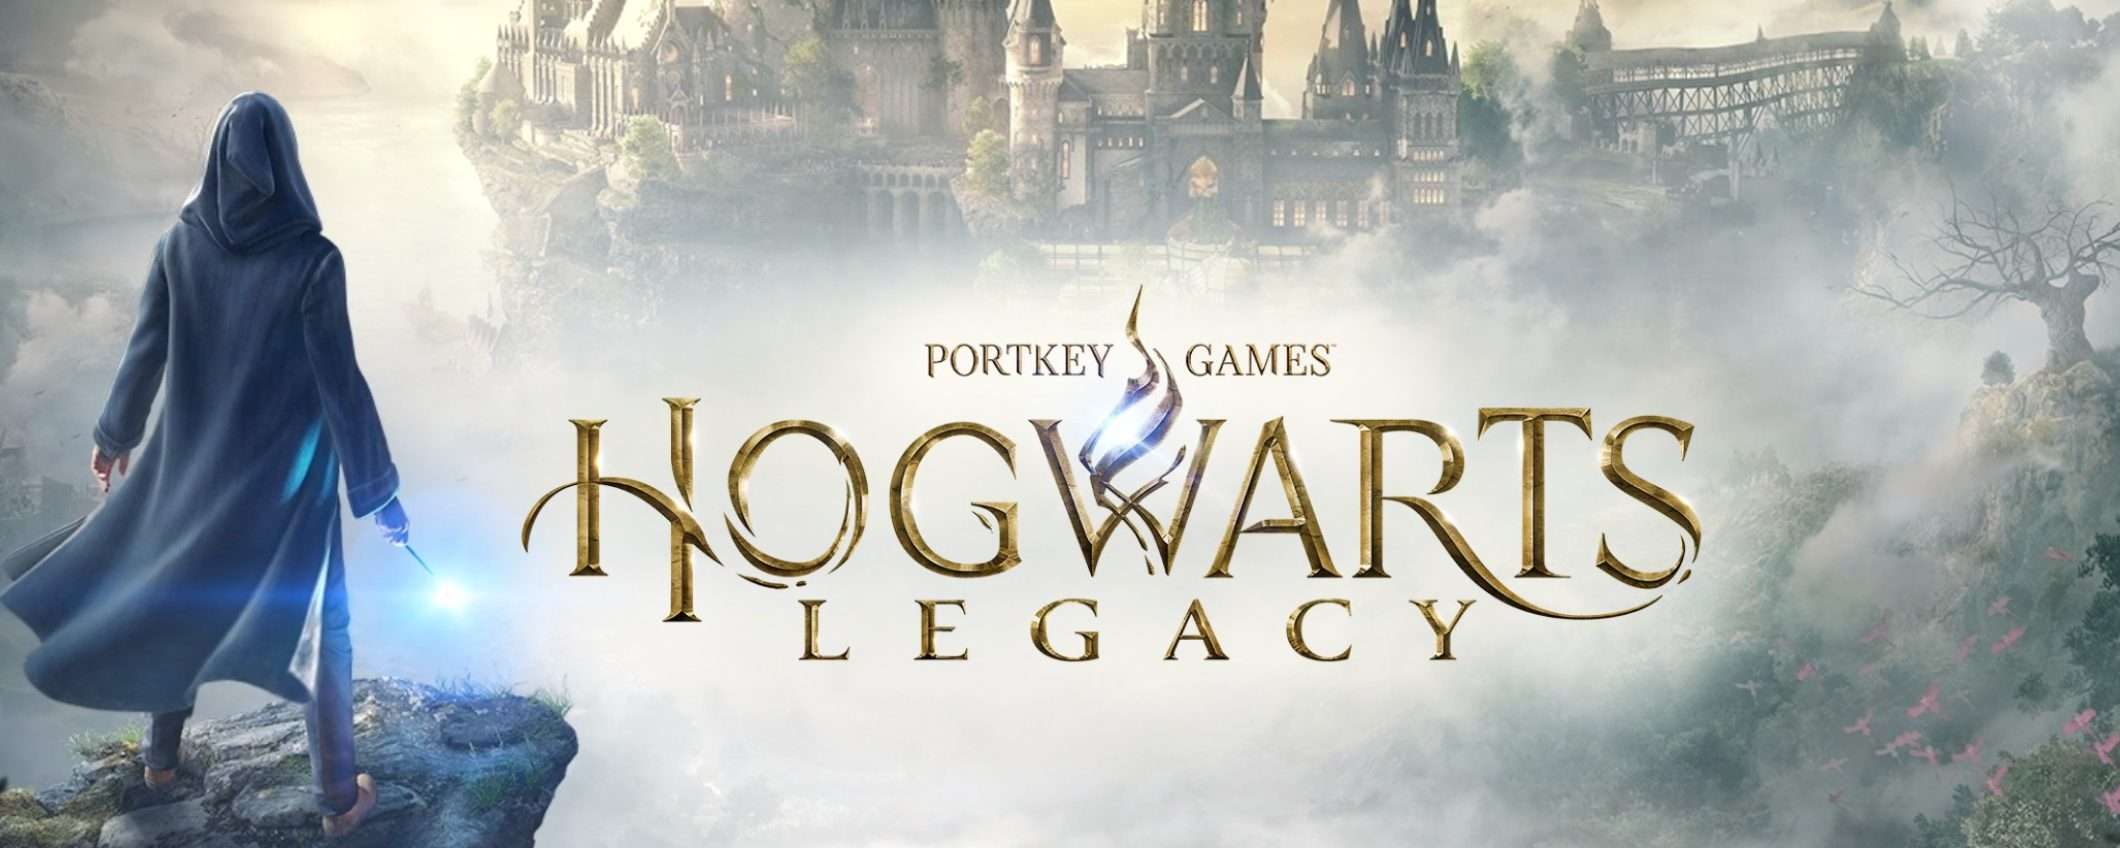 Hogwarts Legacy per PlayStation 5: se ti manca, acquistalo ORA